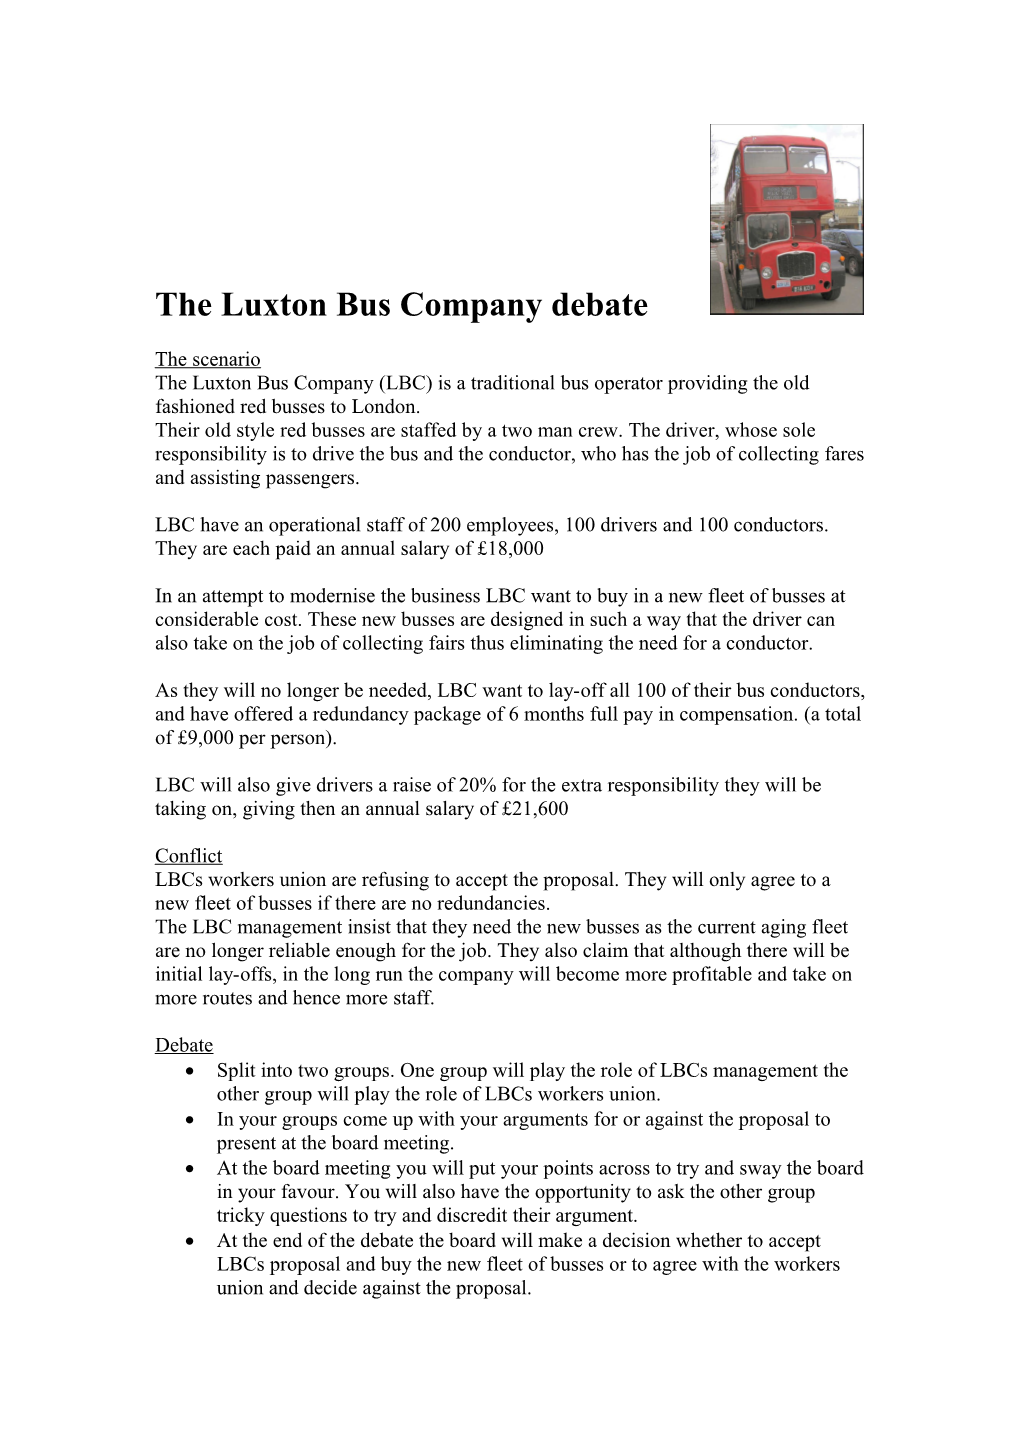 The Luxton Bus Company Debate